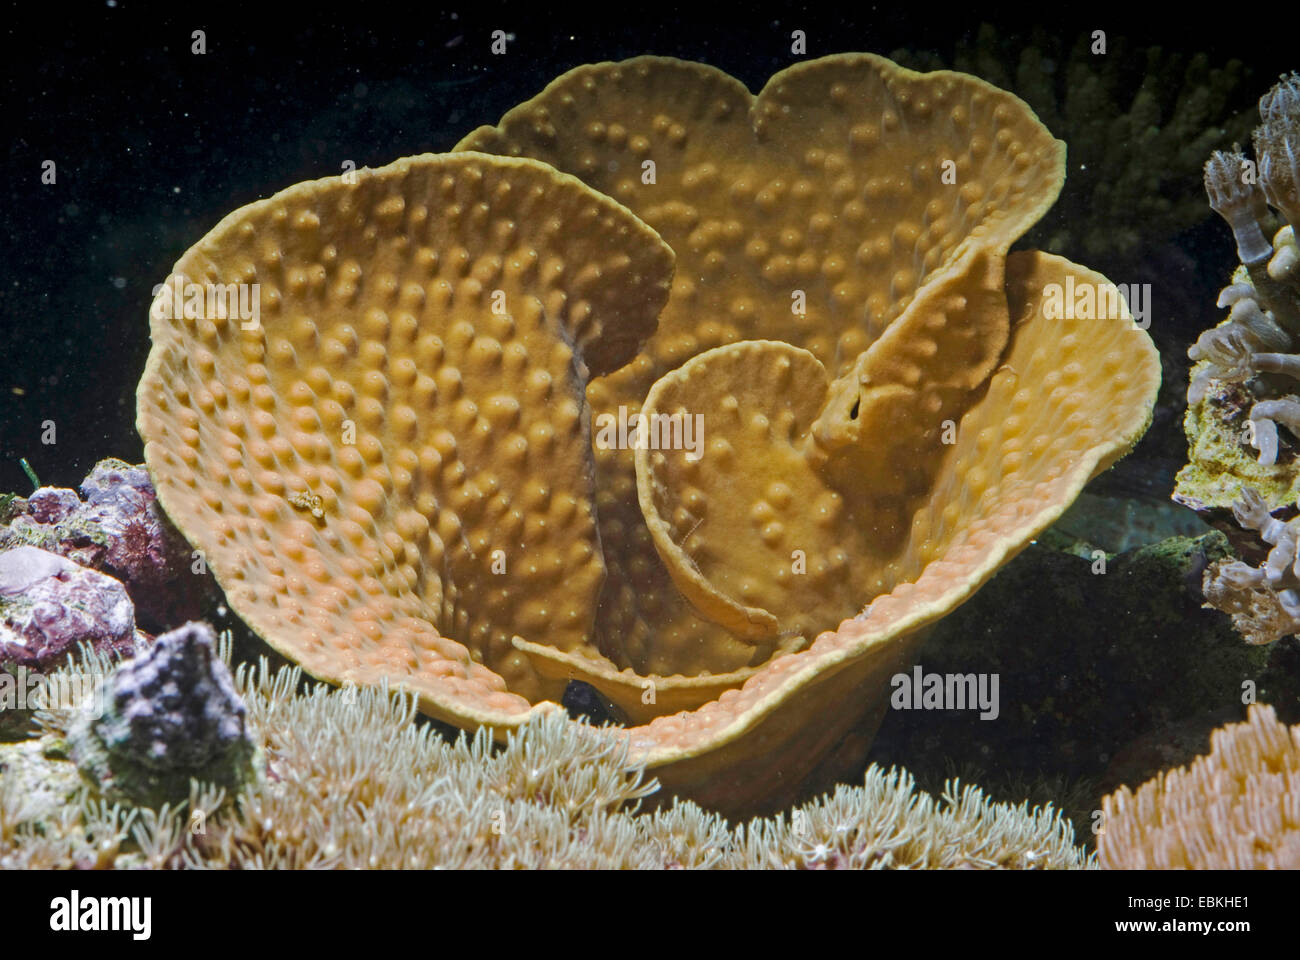 Cup Coral (Turbinaria reniformis), top view Stock Photo